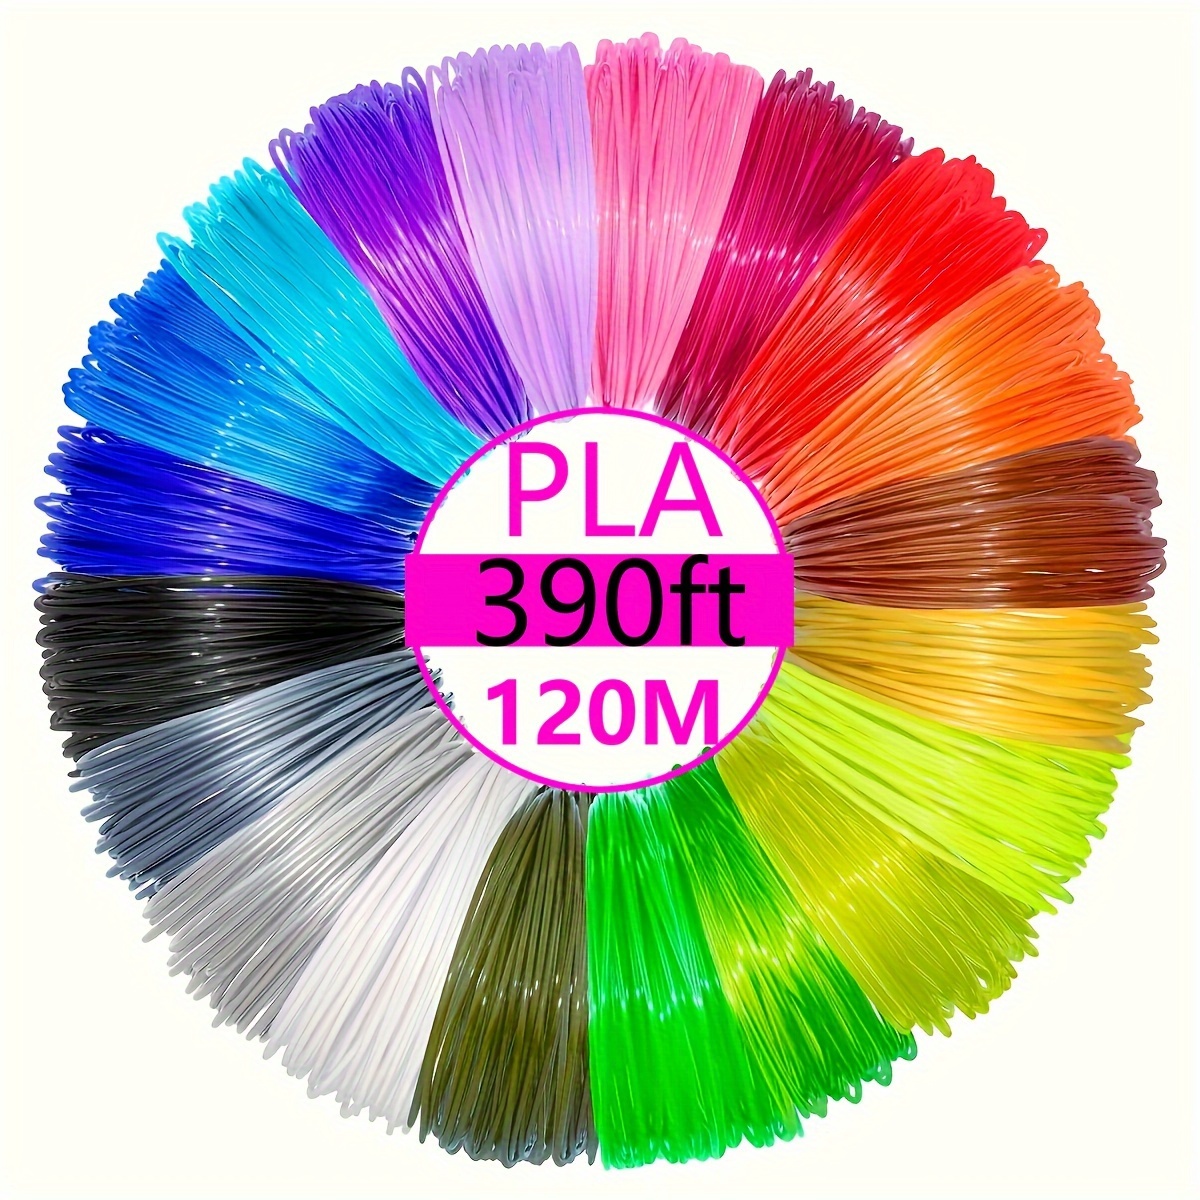 

5/16/20/24 Colors Per Pack Pla Filament For 3d Printer And 3d Pen, 5m/16.4ft For 3d Pen, 1.75mm Pla 3d Print Filament